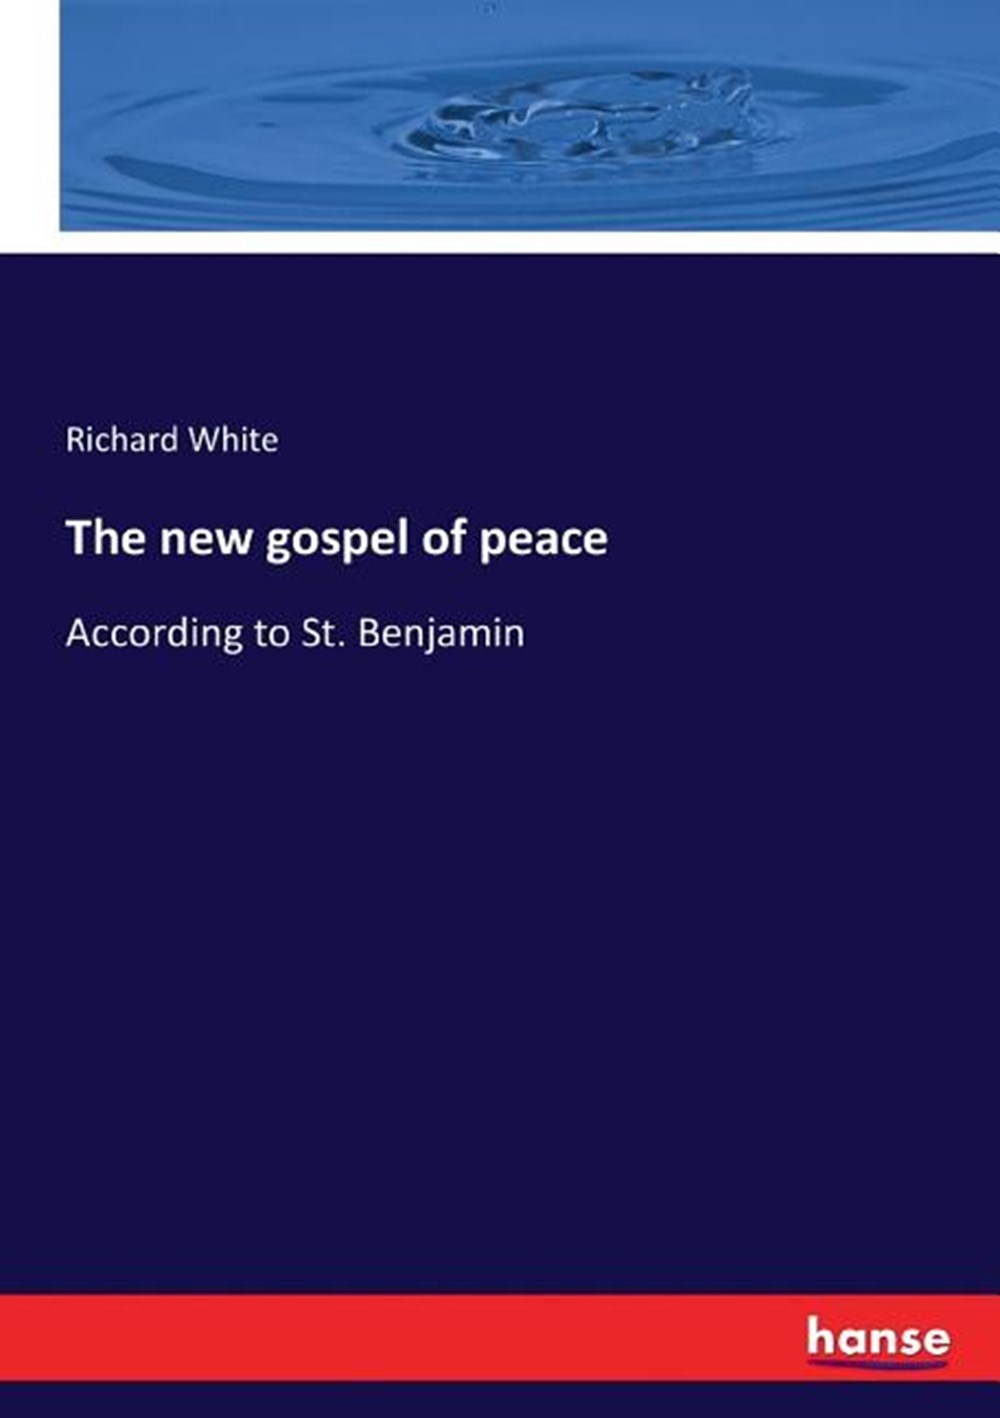 new gospel of peace: According to St. Benjamin